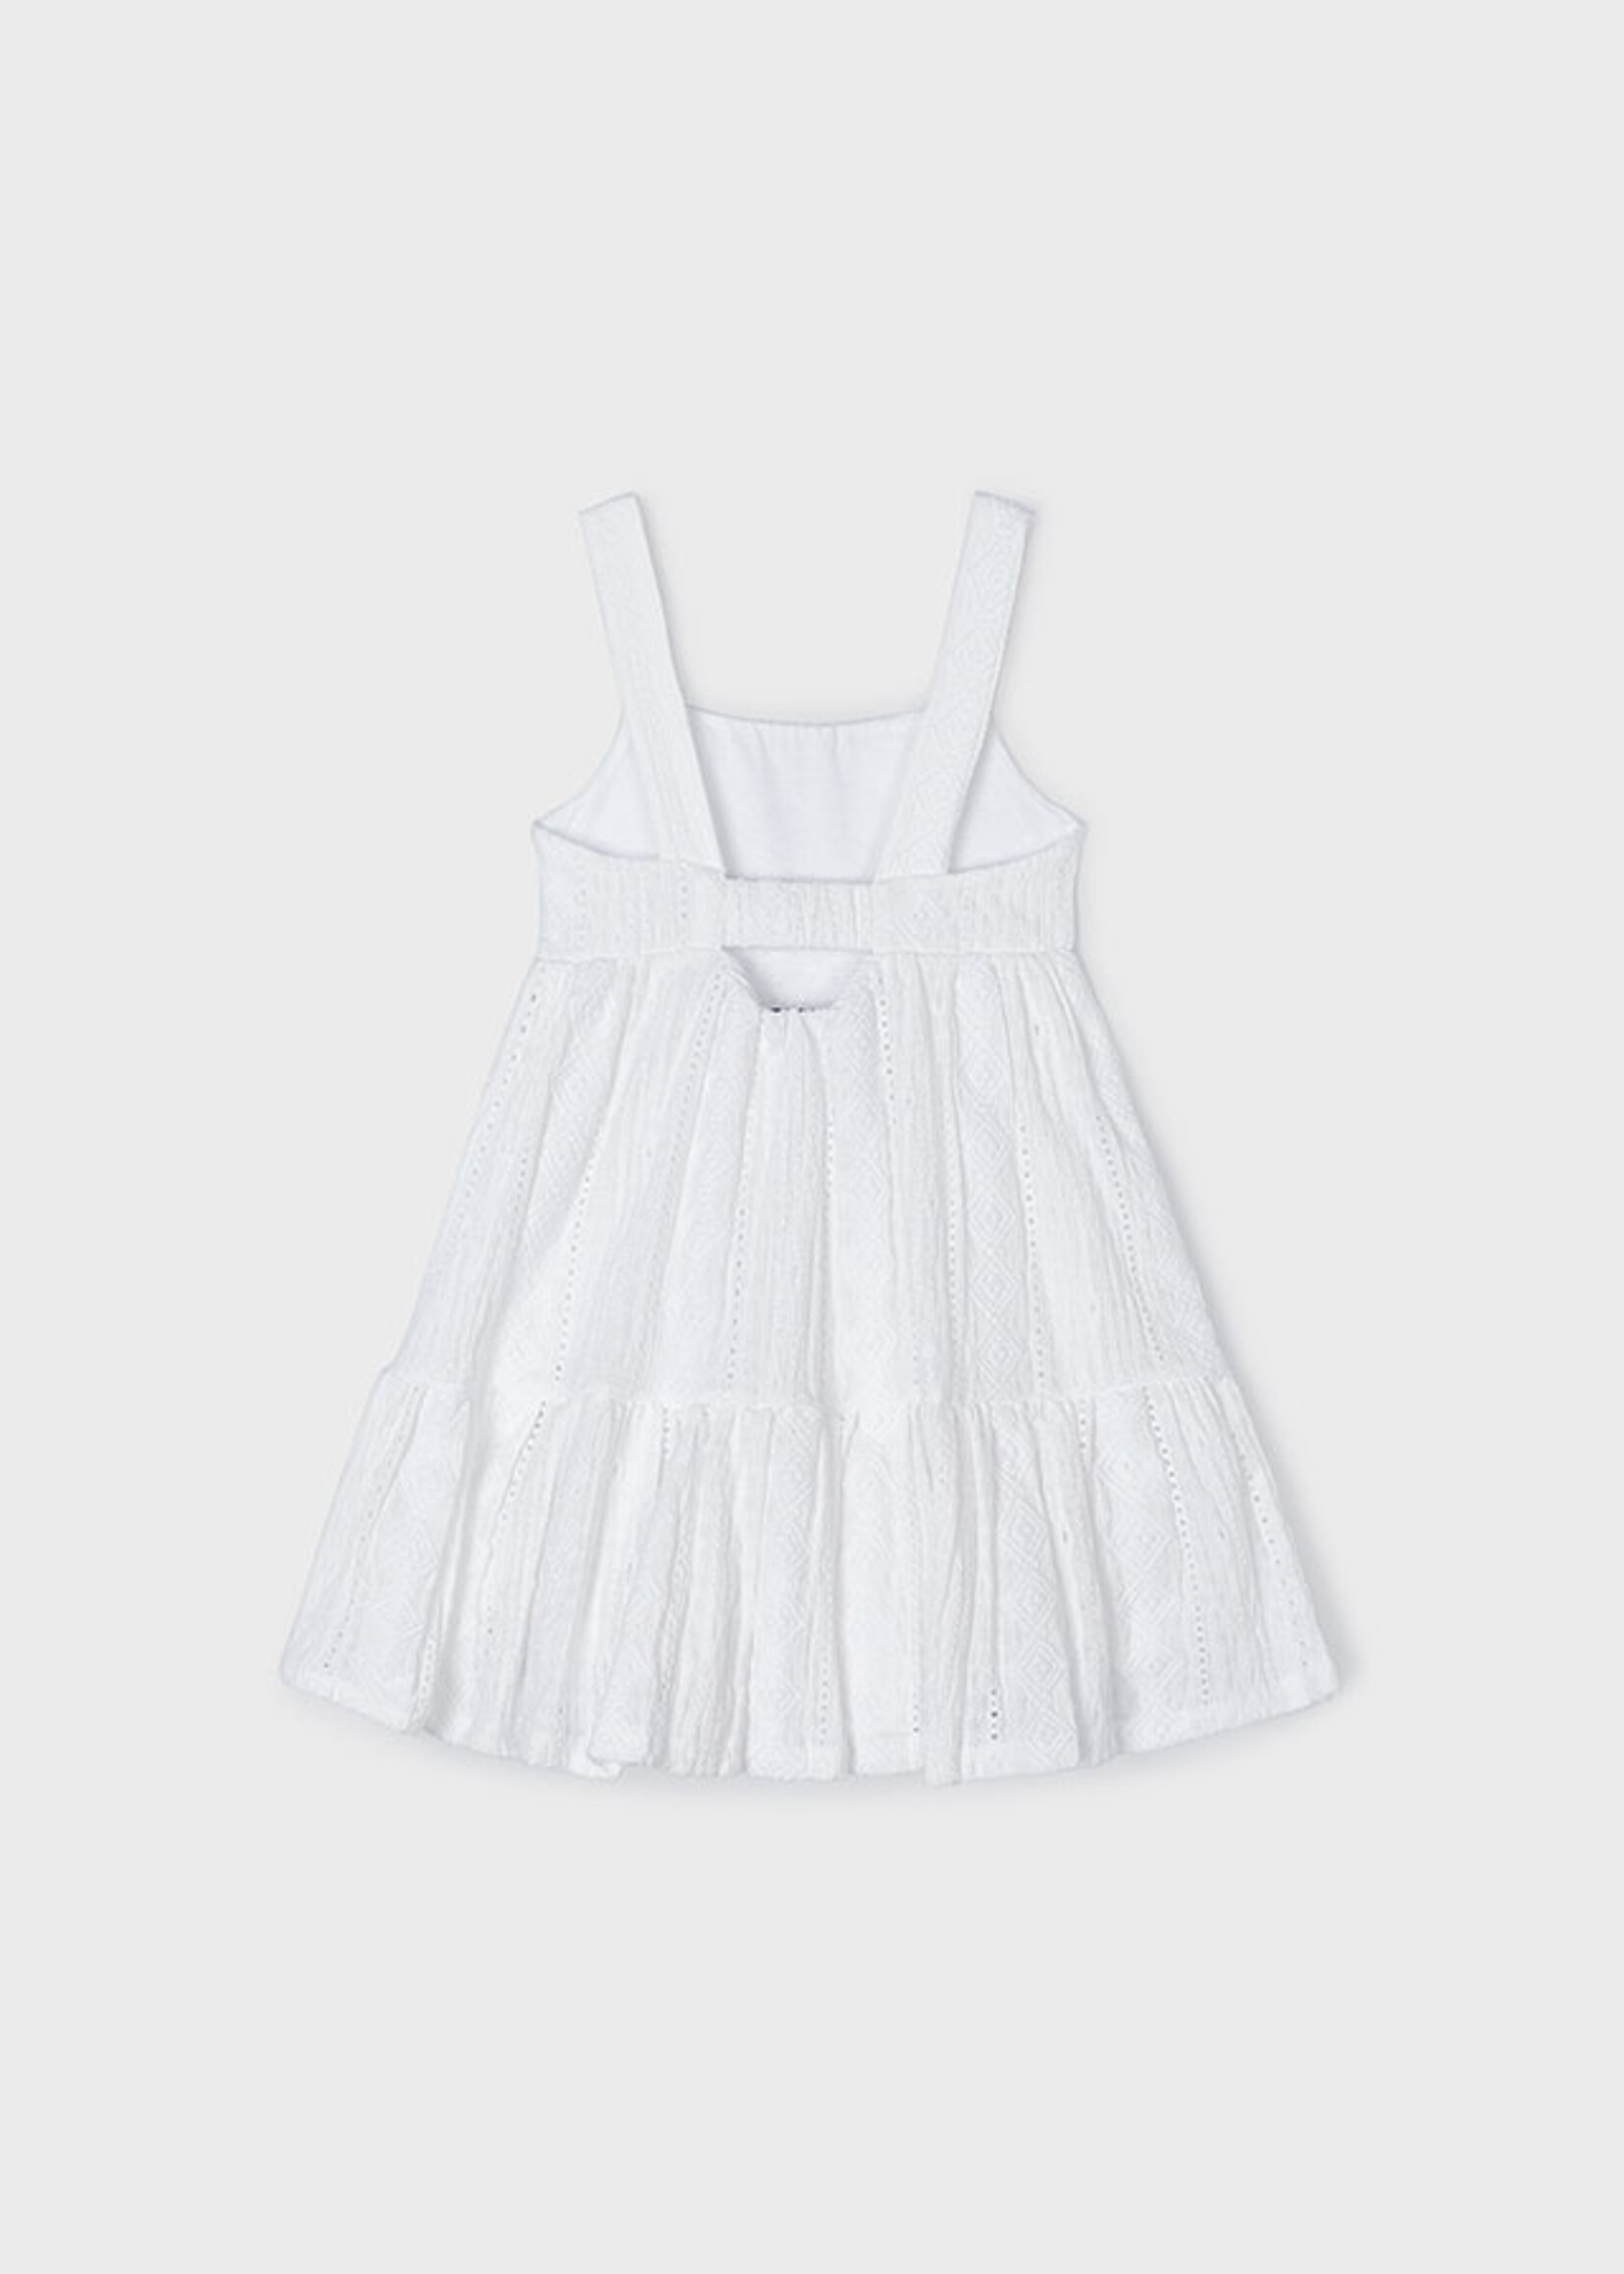 Mayoral Mini Girl            3950 Dress                         White